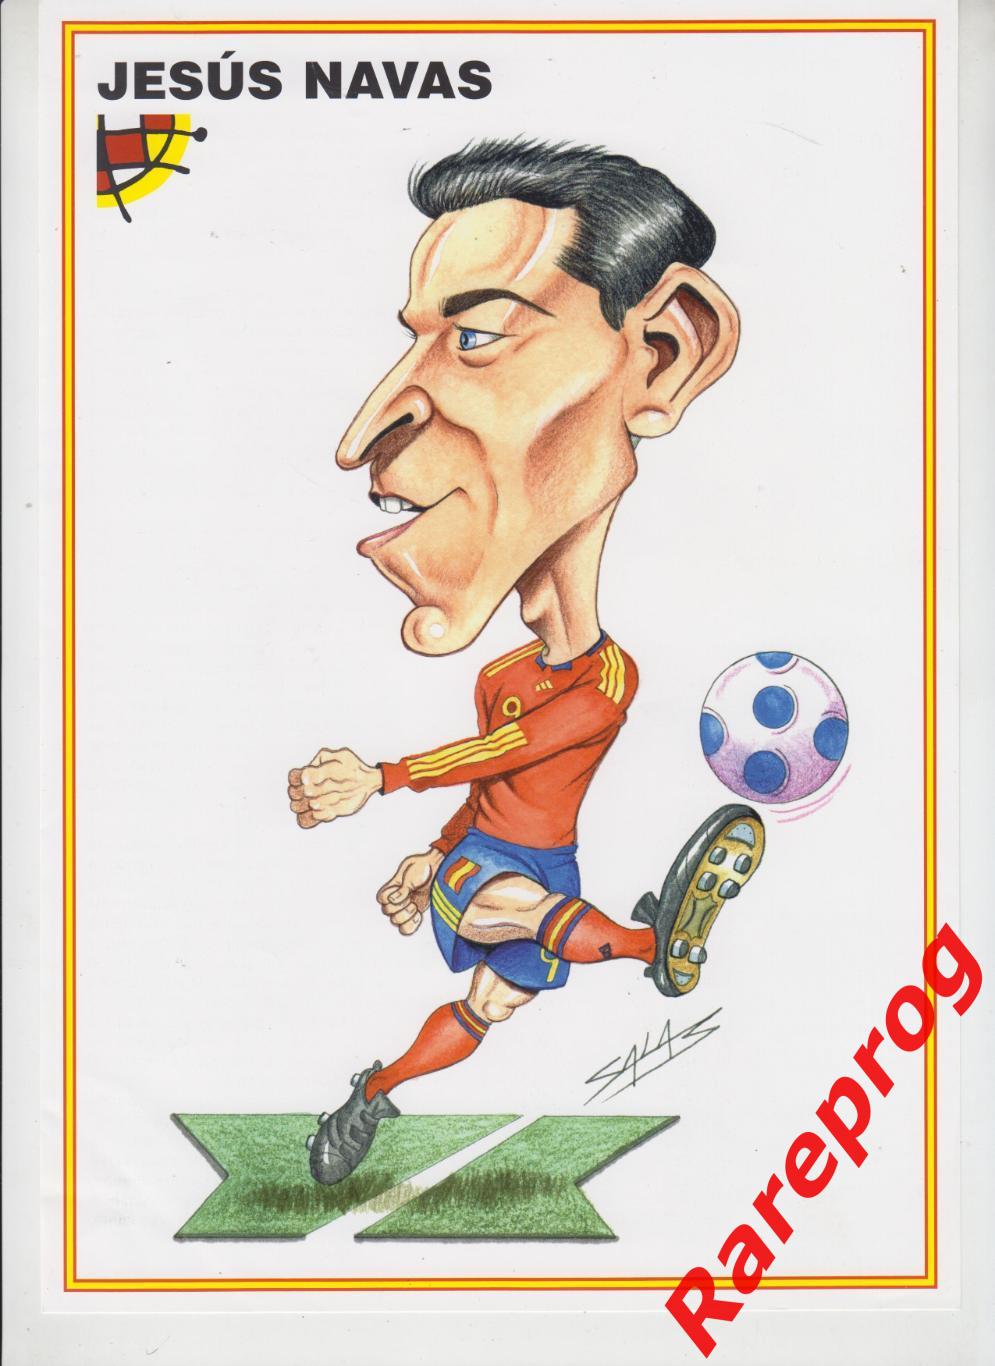 журнал Футбол RFEF Испания № 126 ноябрь 2009 - постер Jesus Navas 1